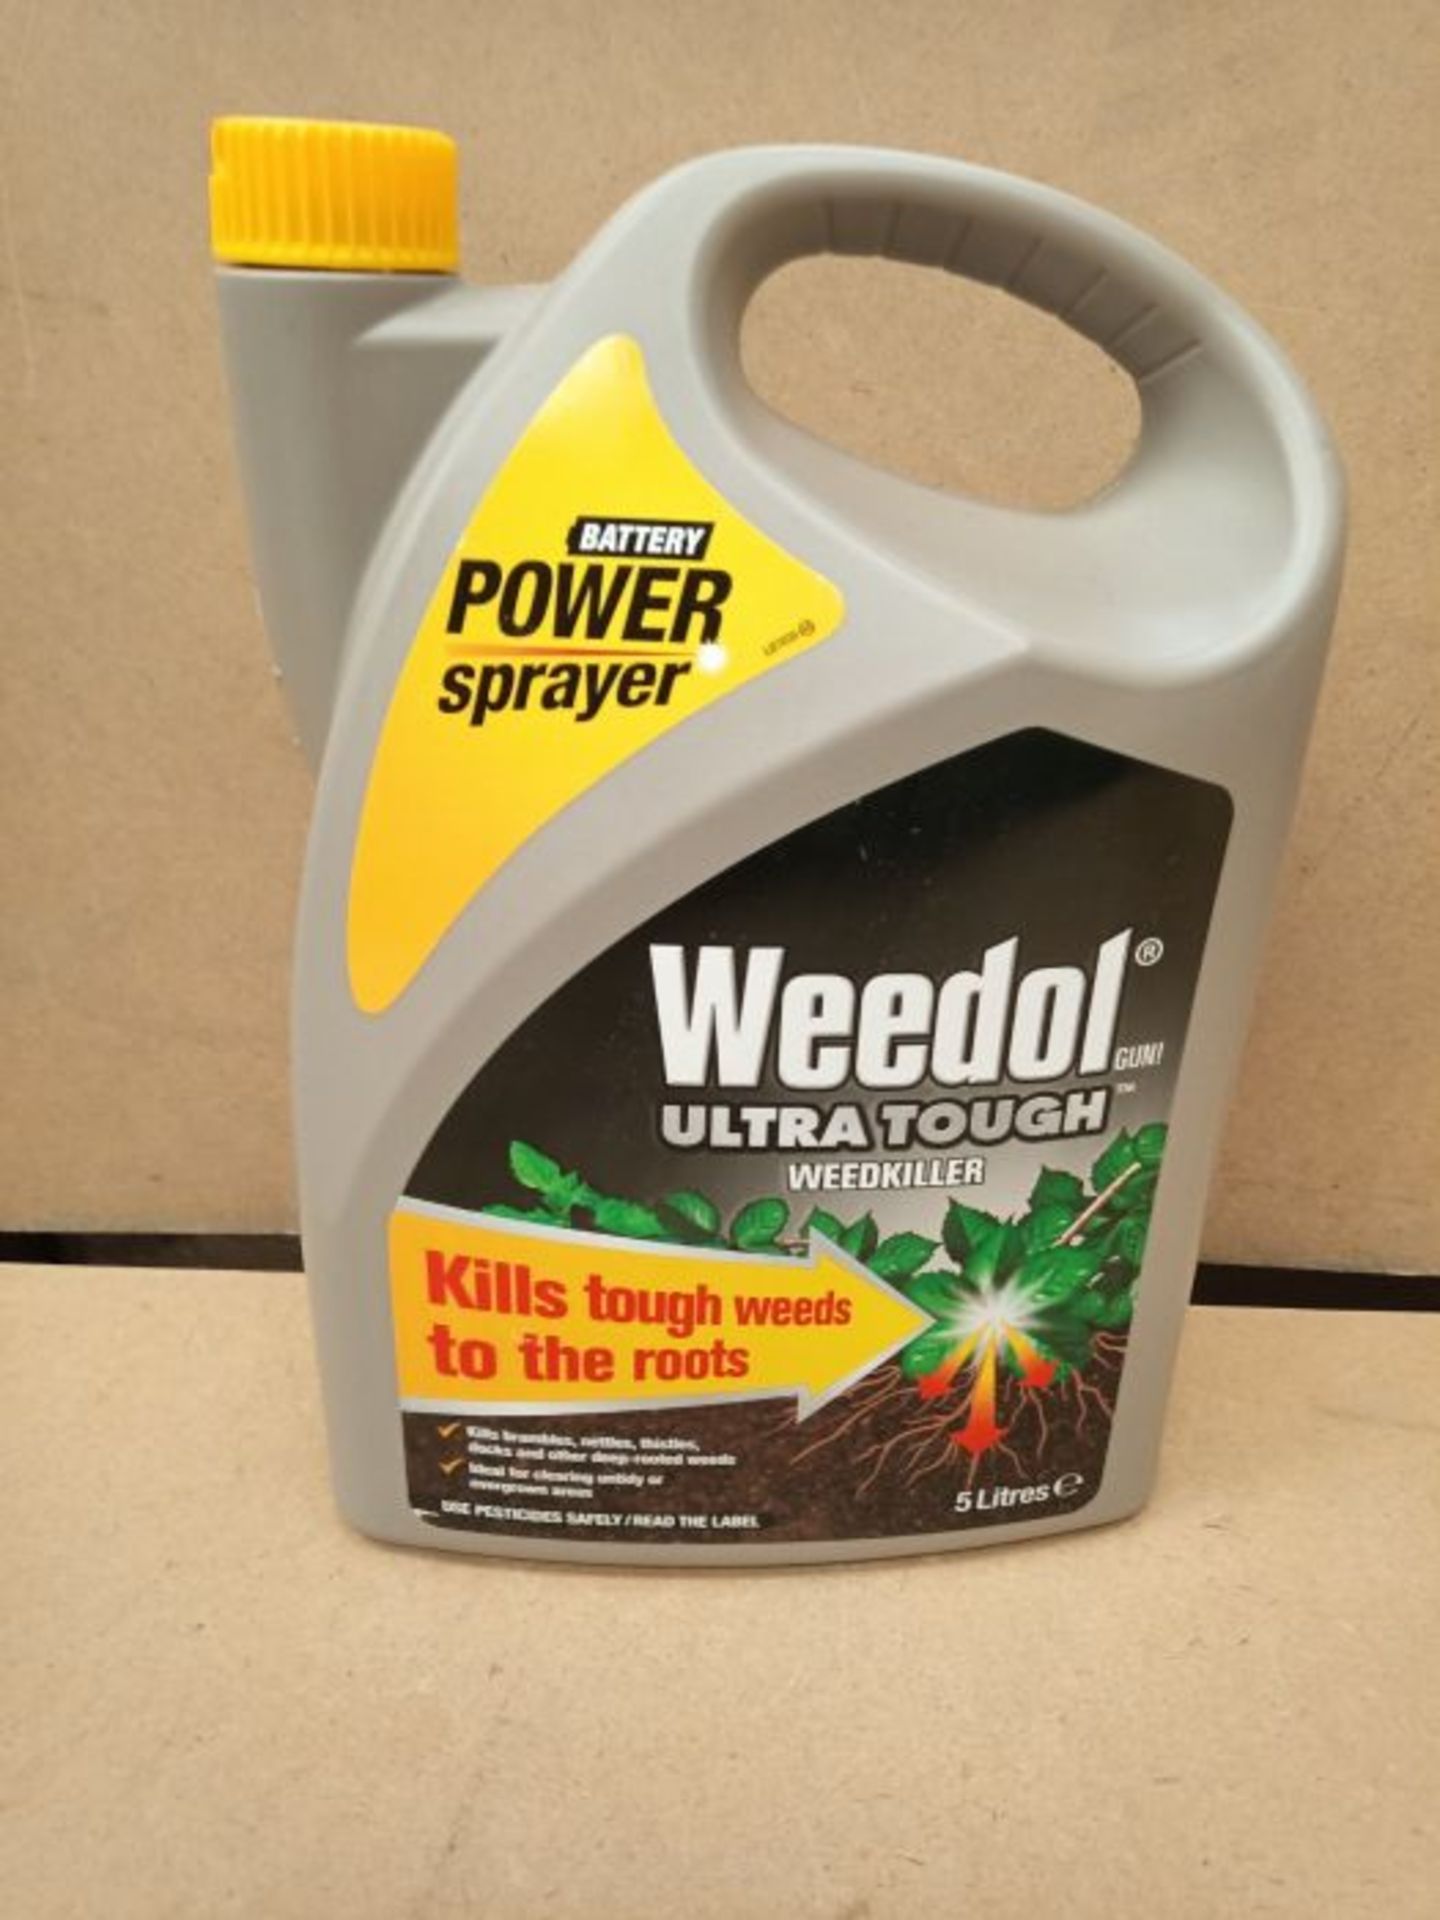 Weedol Ultra Tough Weedkiller, Battery Power Sprayer, 5 Litre, Black - Image 2 of 3